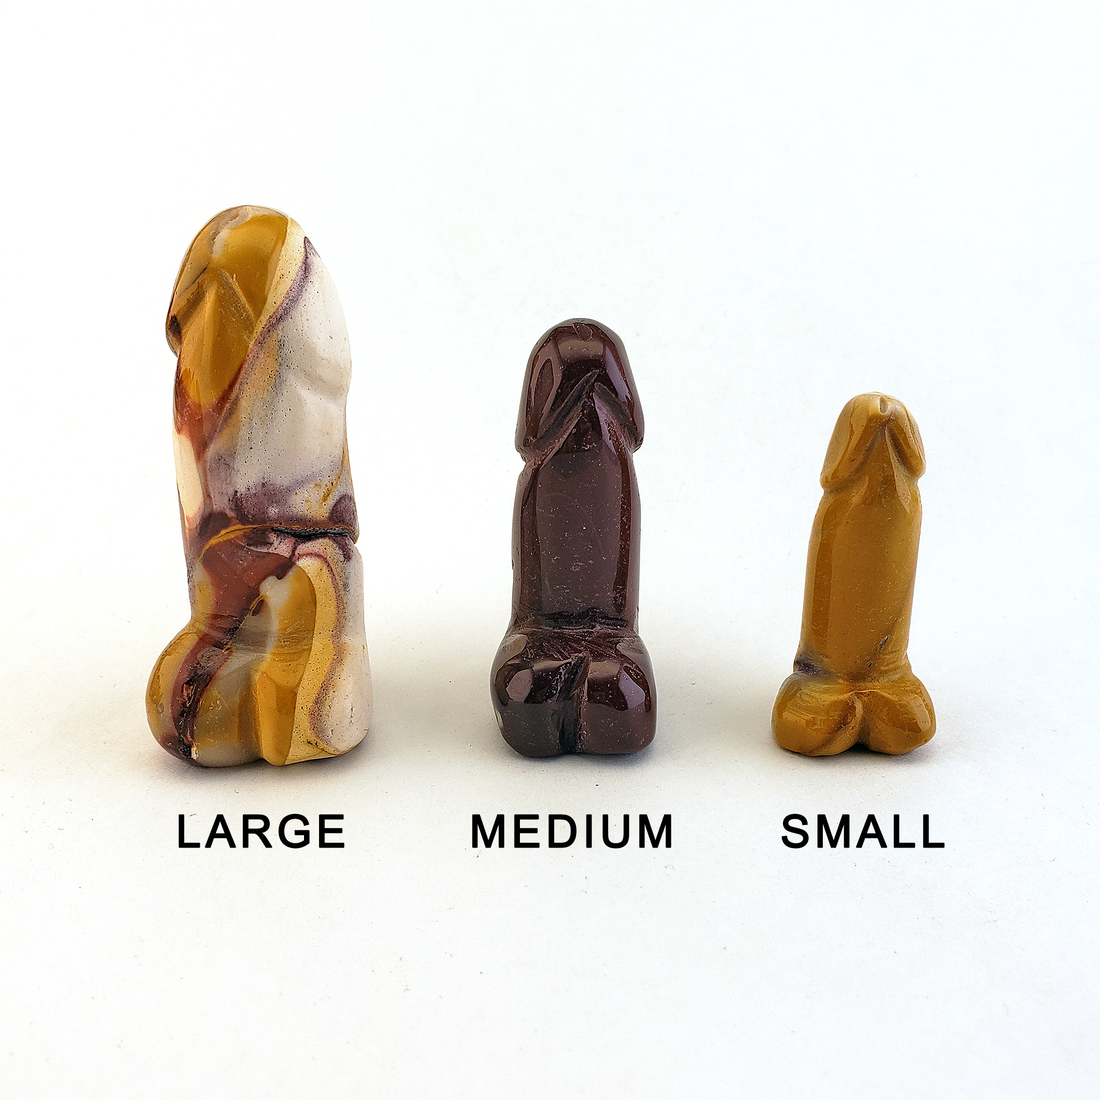 Big Dick Energy - Mookaite Crystal Penis Power Totem Gift Box